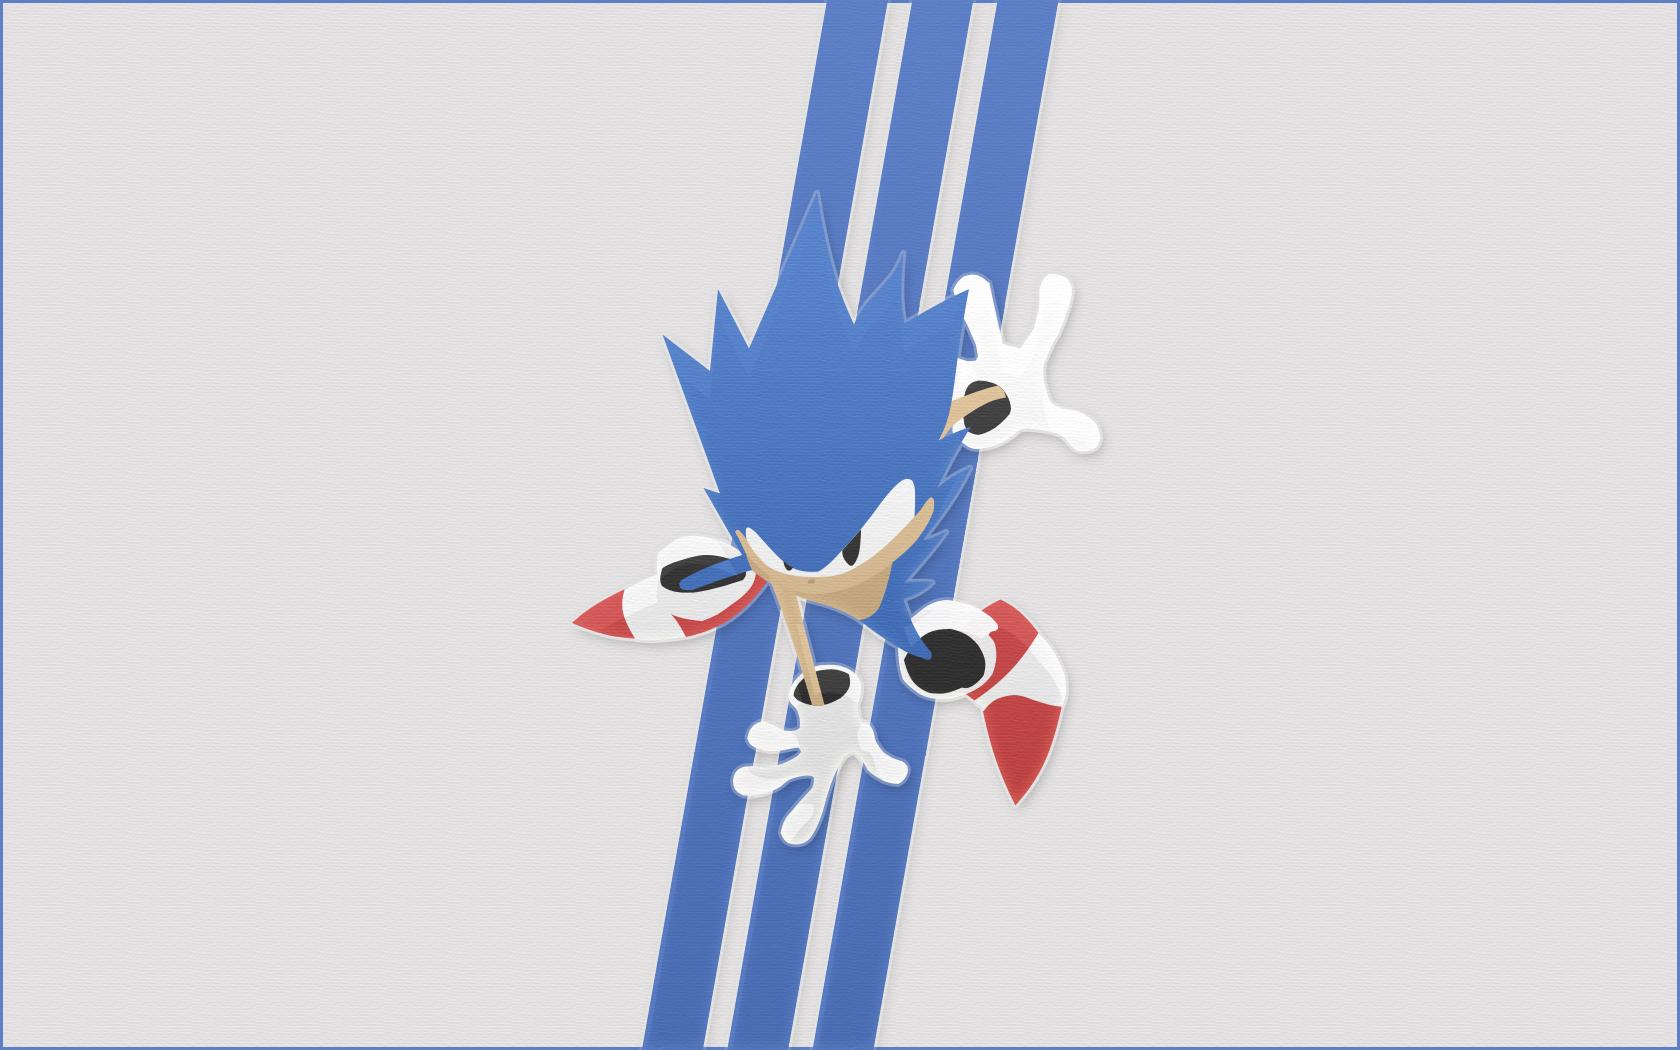 Sonic the Hedgehog Wallpaper